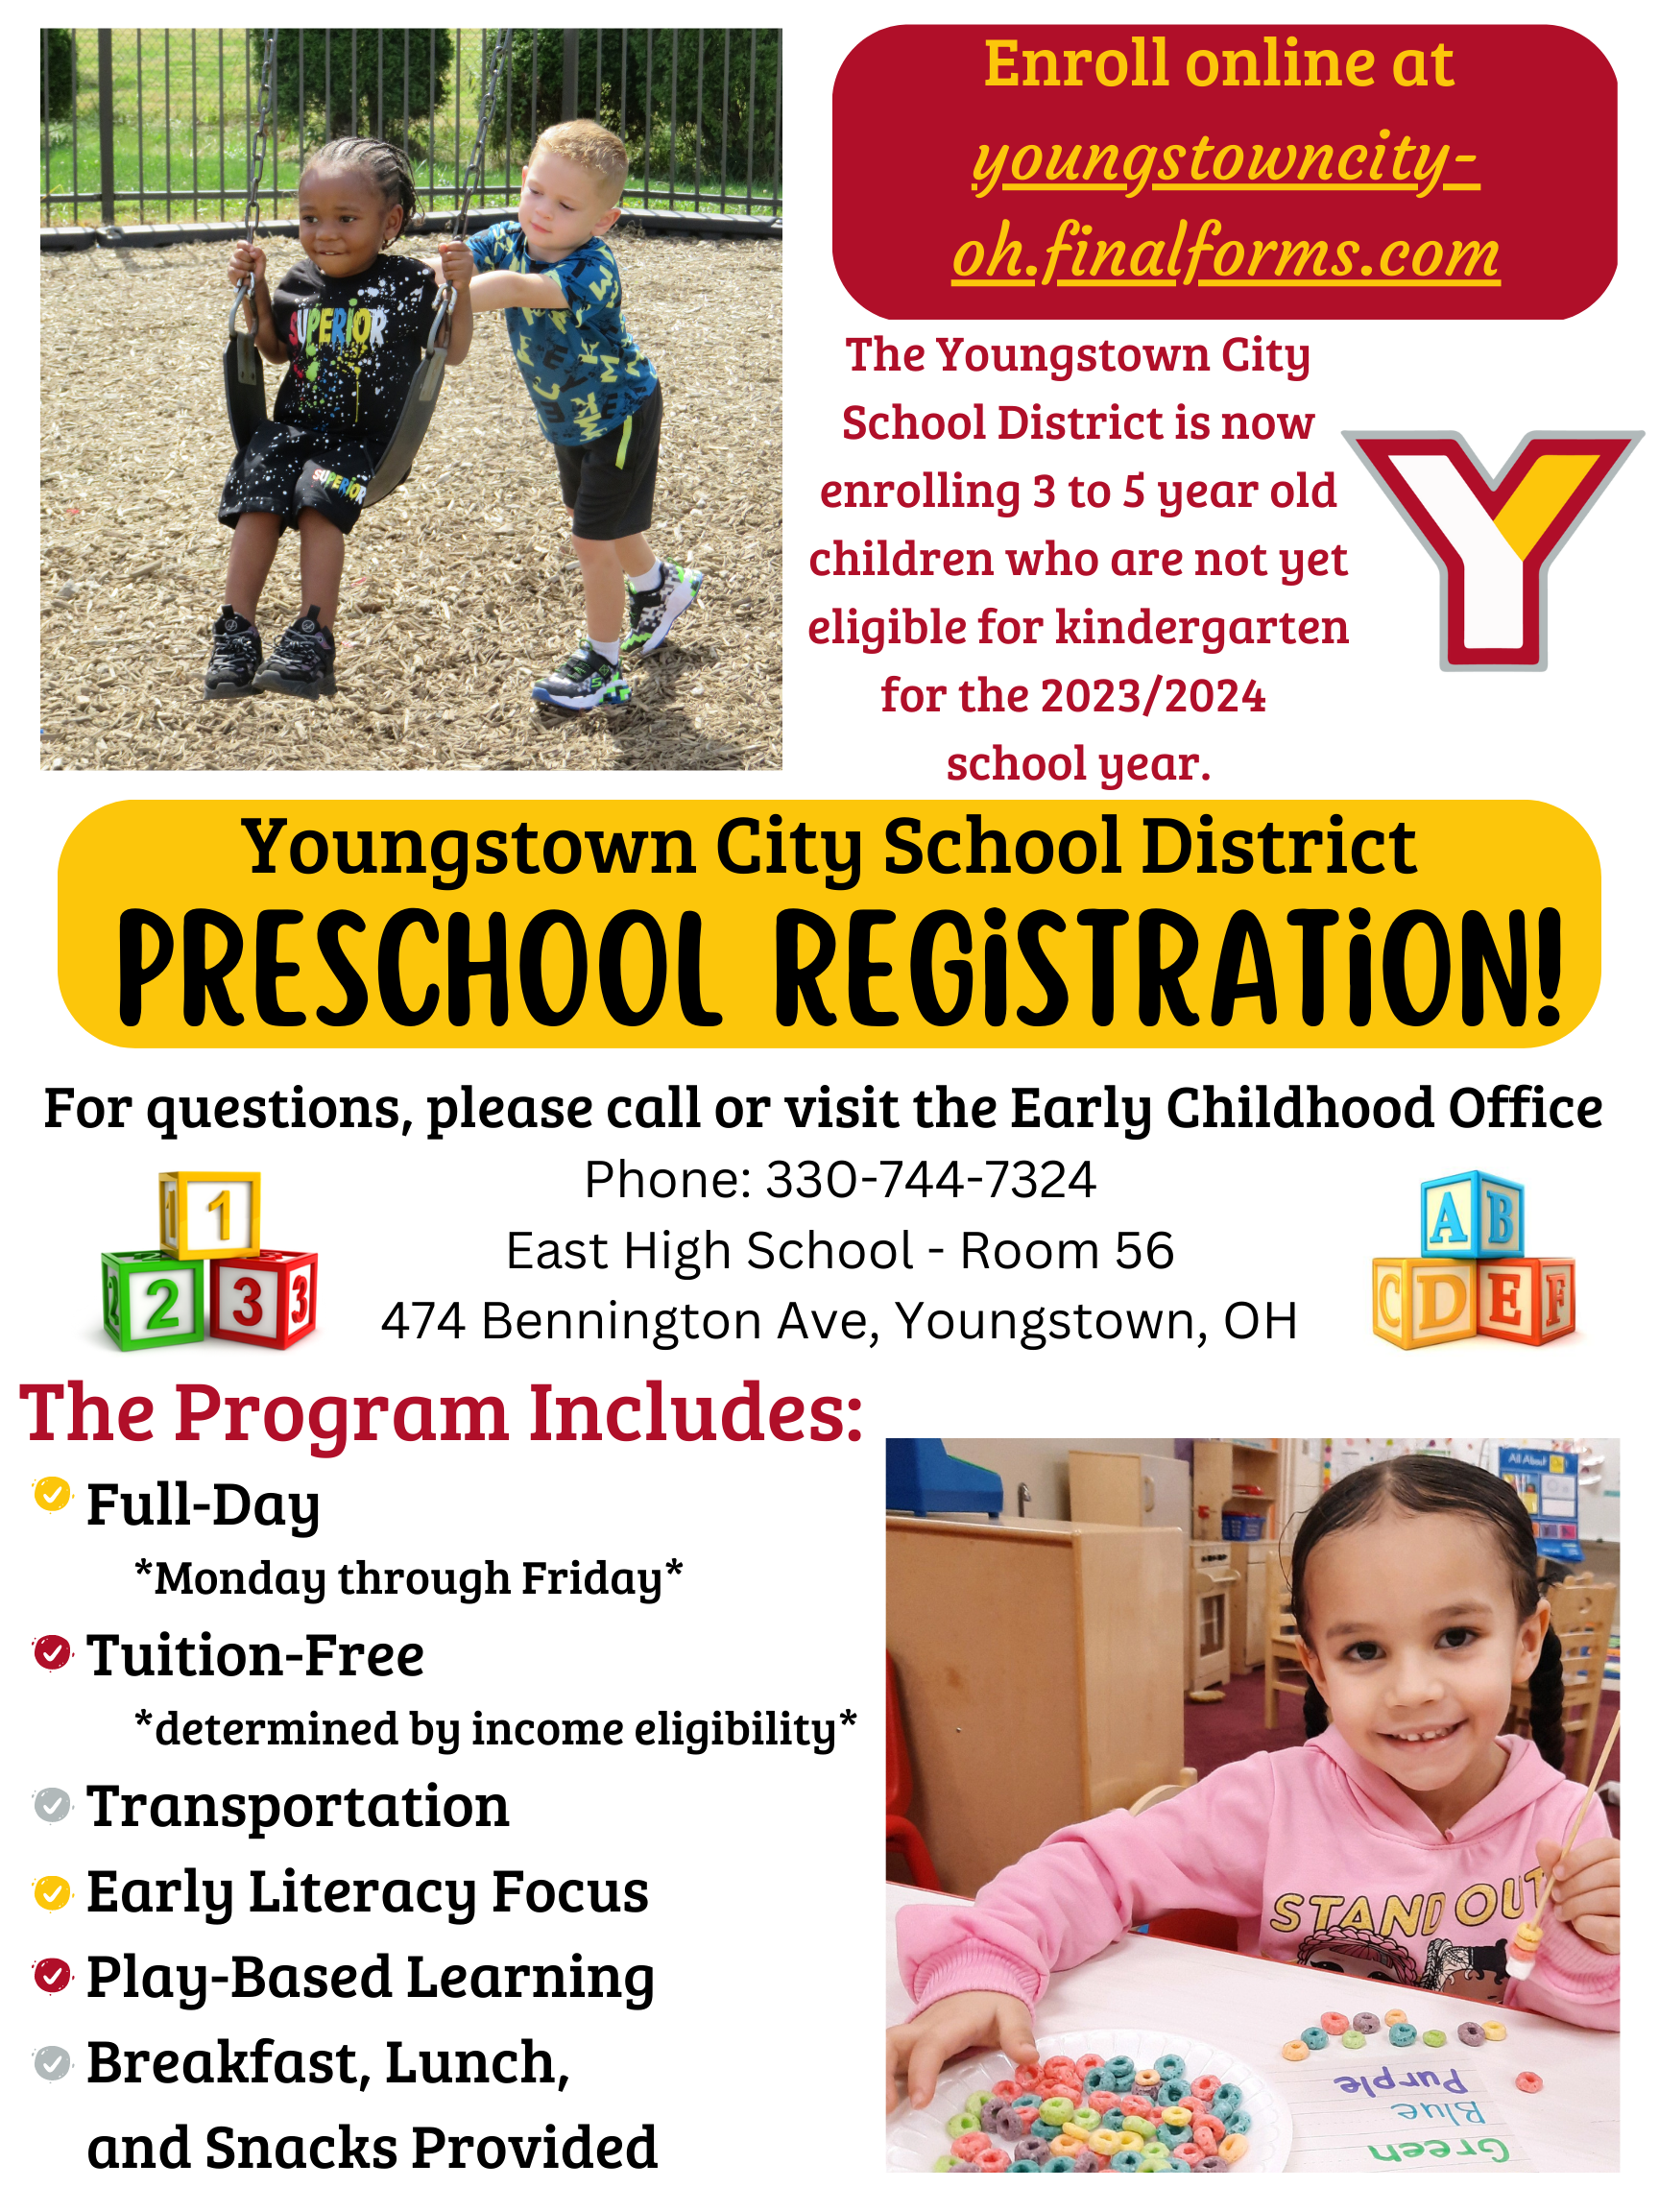 Flyer for YCSD preschool registration. You can enroll through Final Forms.